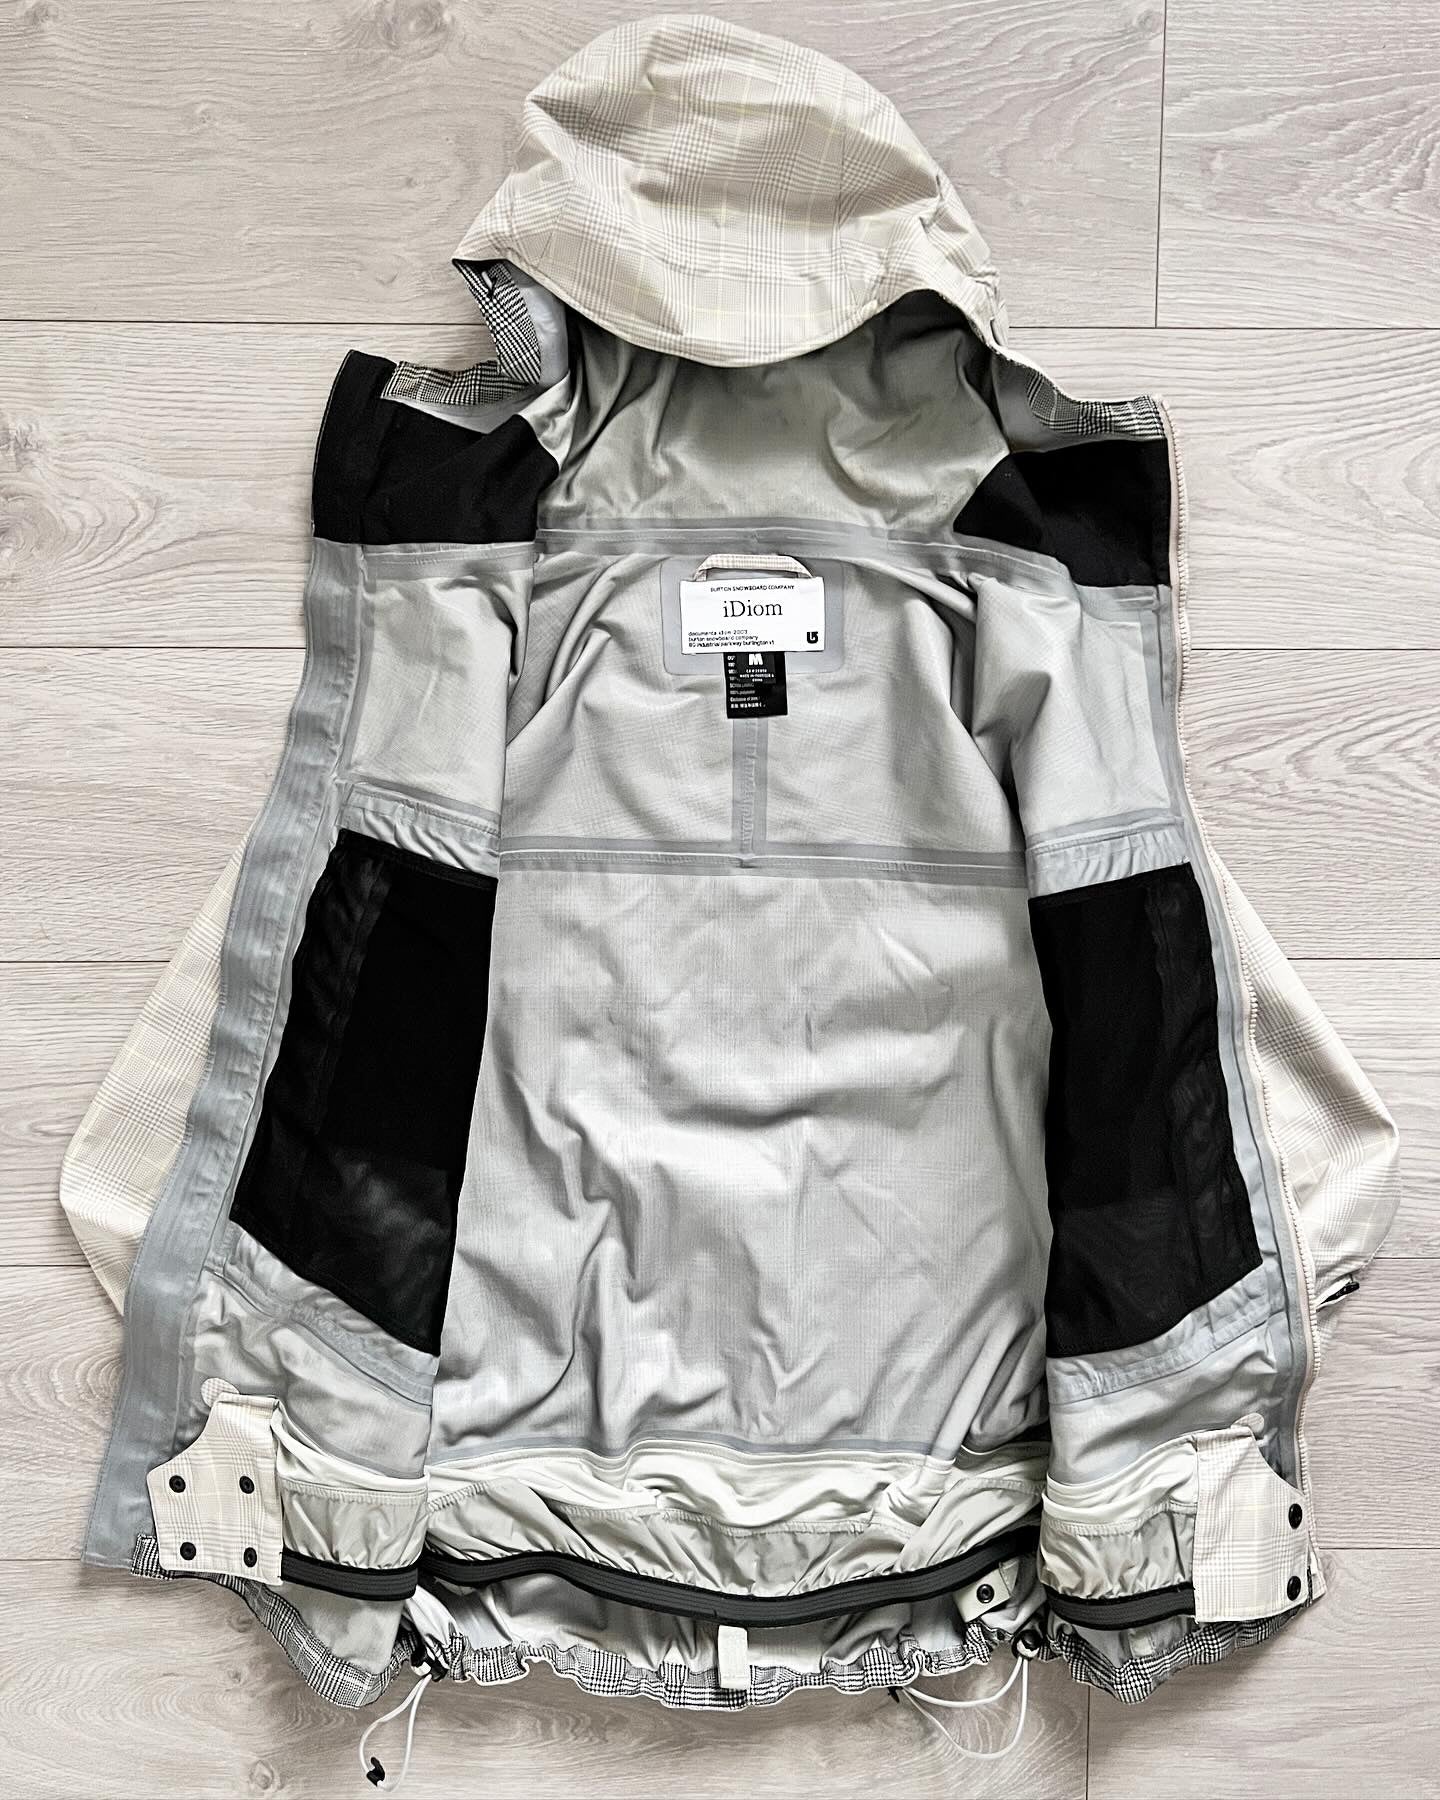 Burton iDiom x Hiroshi Fujiwara 2003 Waterproof Technical Check Jacket - Size M